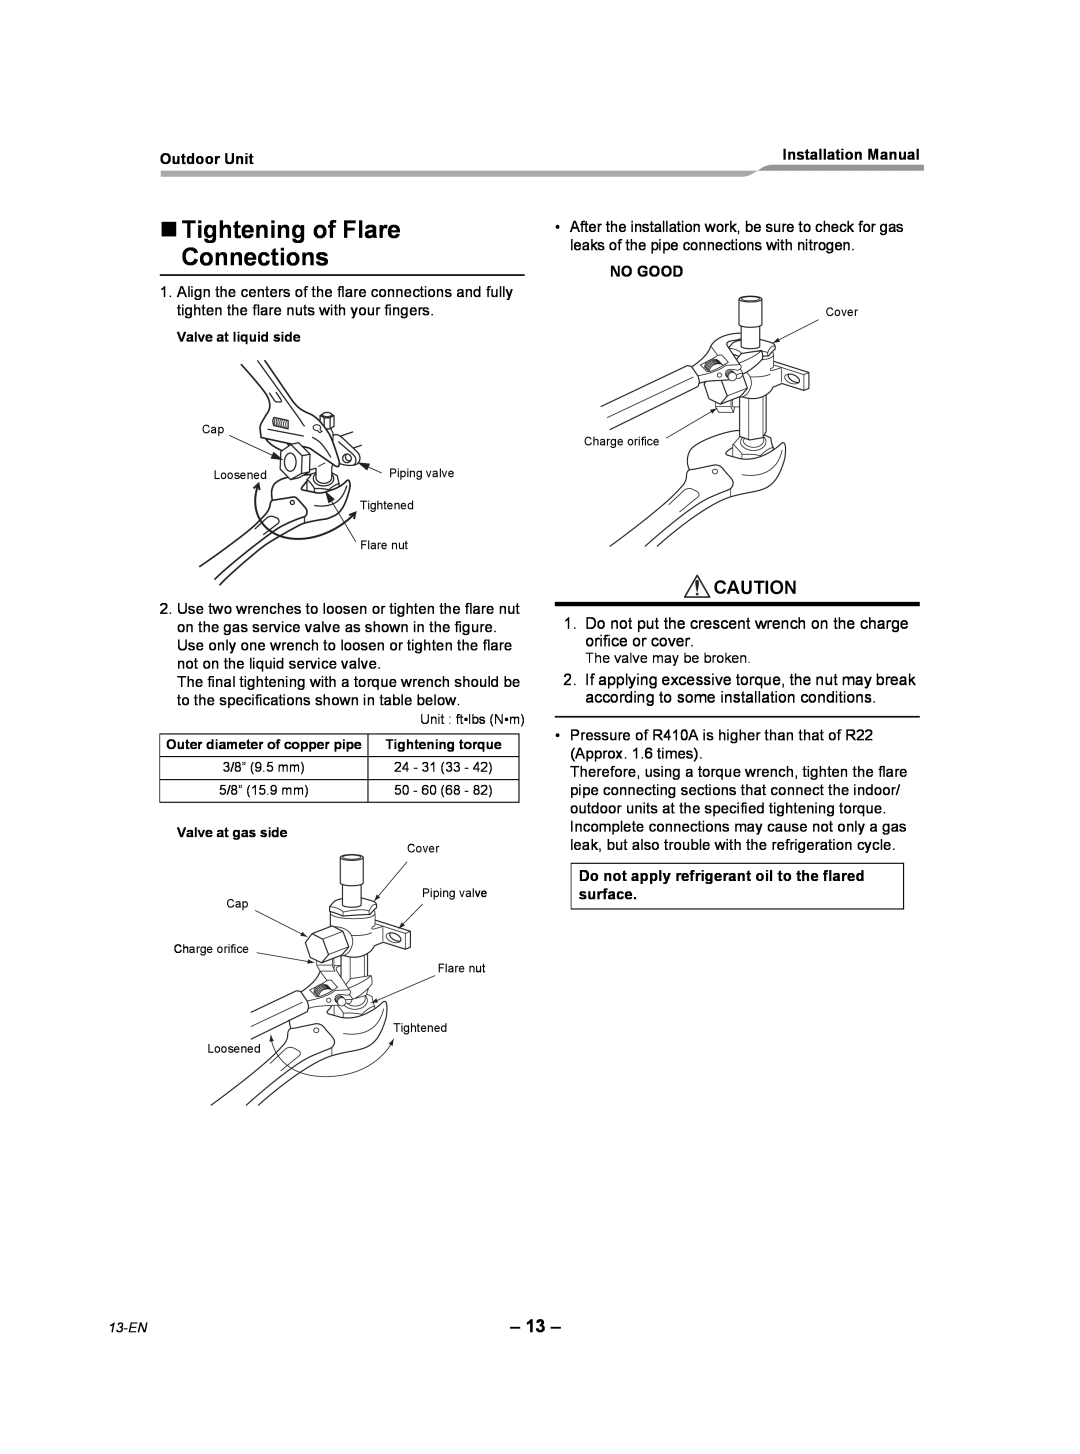 Toshiba RAV-SP240AT2-UL installation manual „Tightening of Flare Connections 